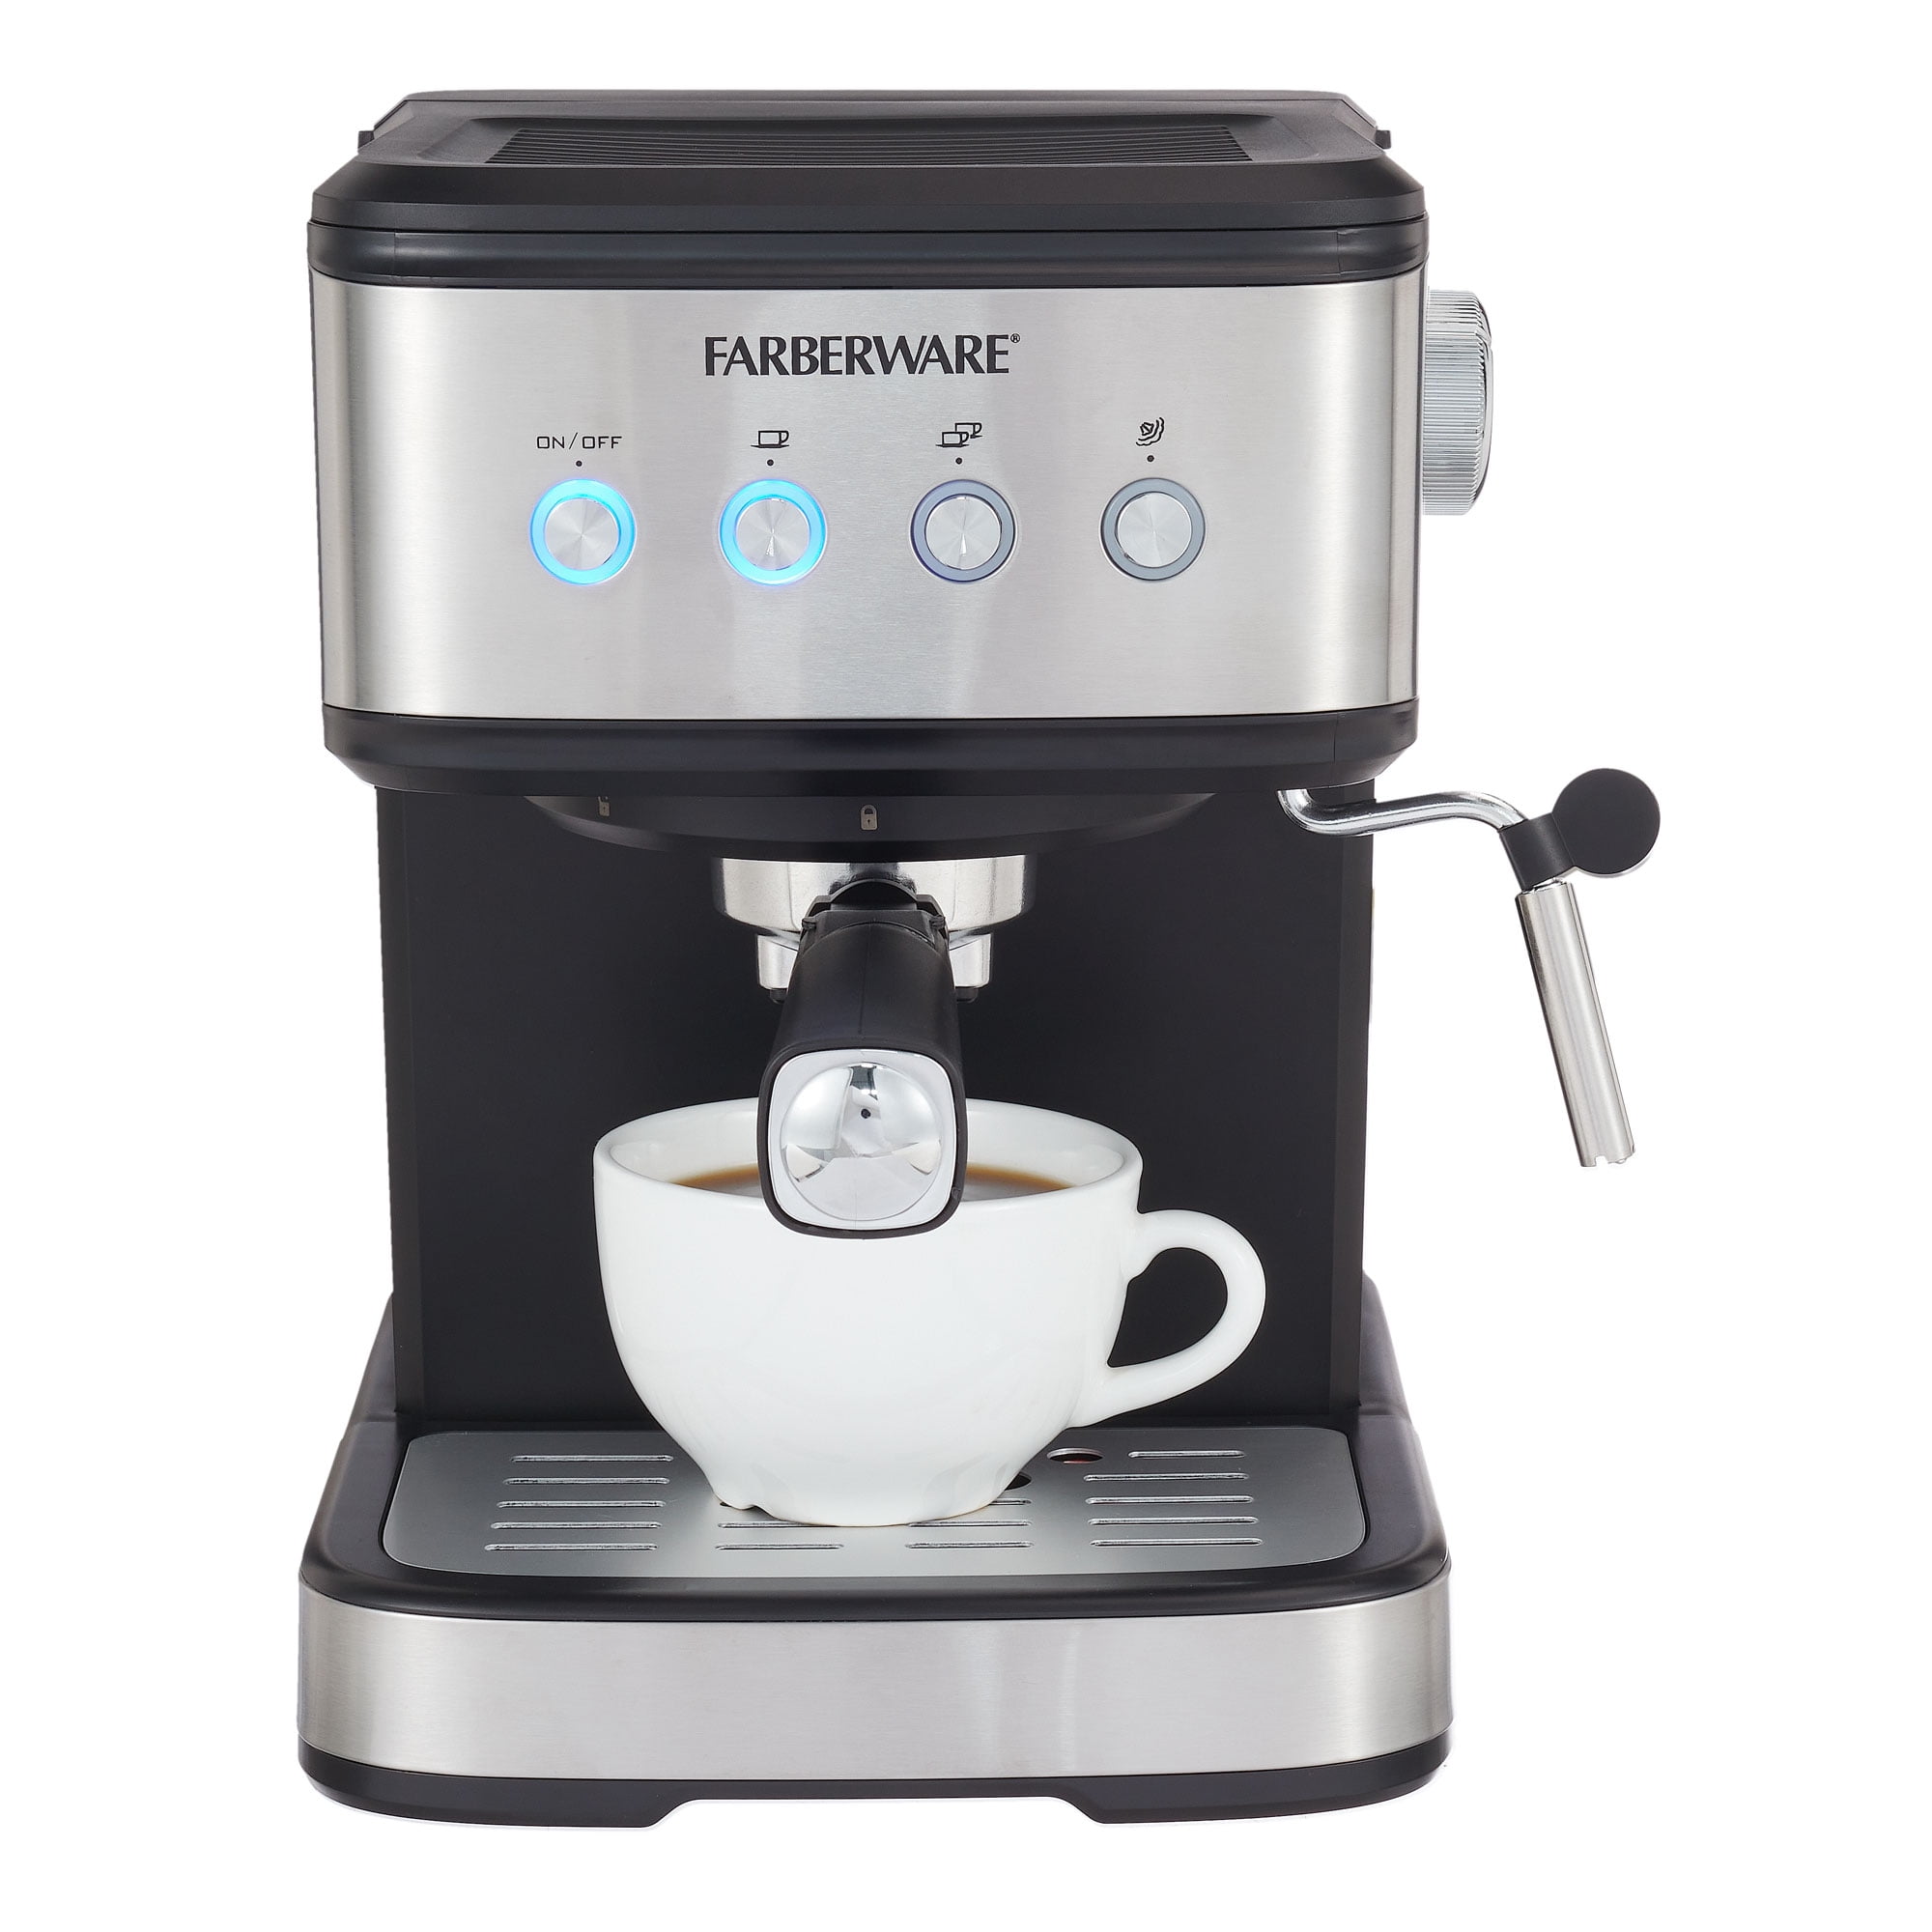 Farberware 1.5L 20 Bar Espresso Maker with Removable Water Tank, Silver and Black, New Condition